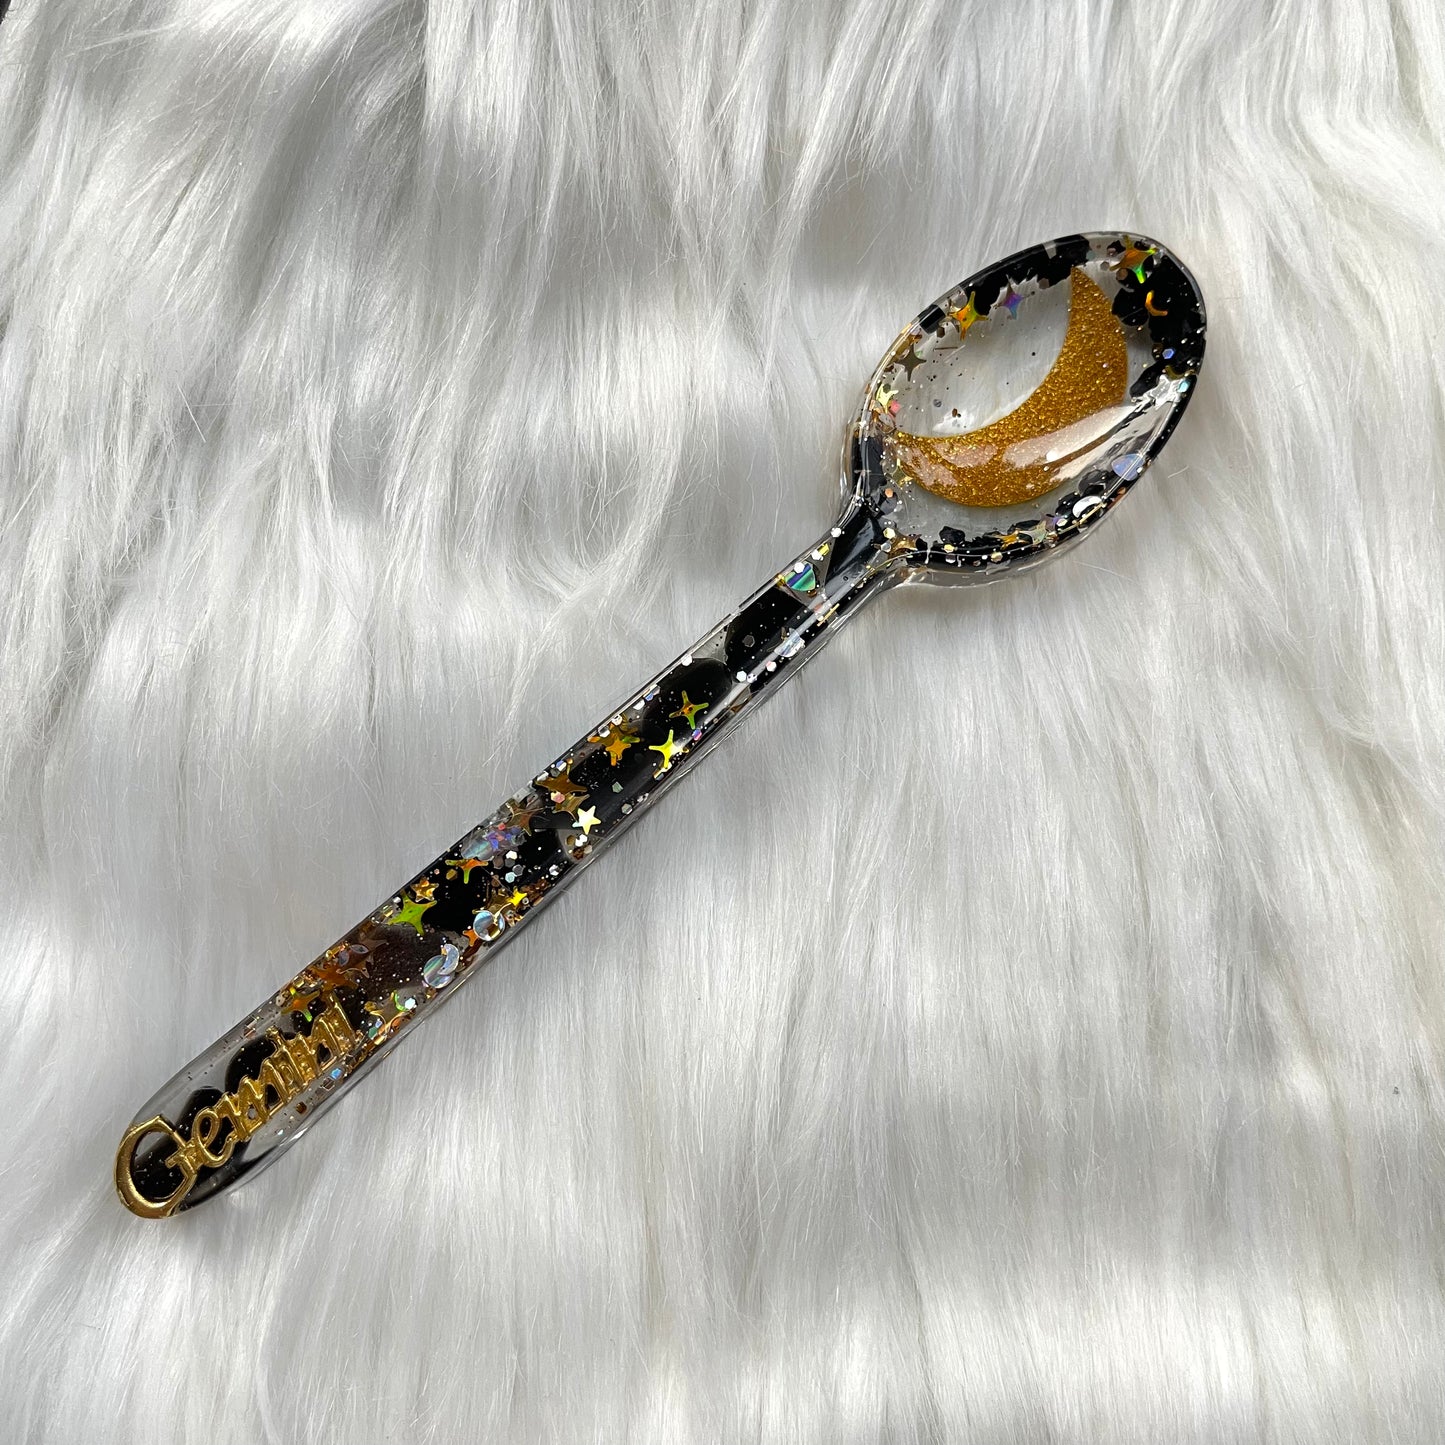 Zodiac Spoon - GOLD - symbolic healing spoon